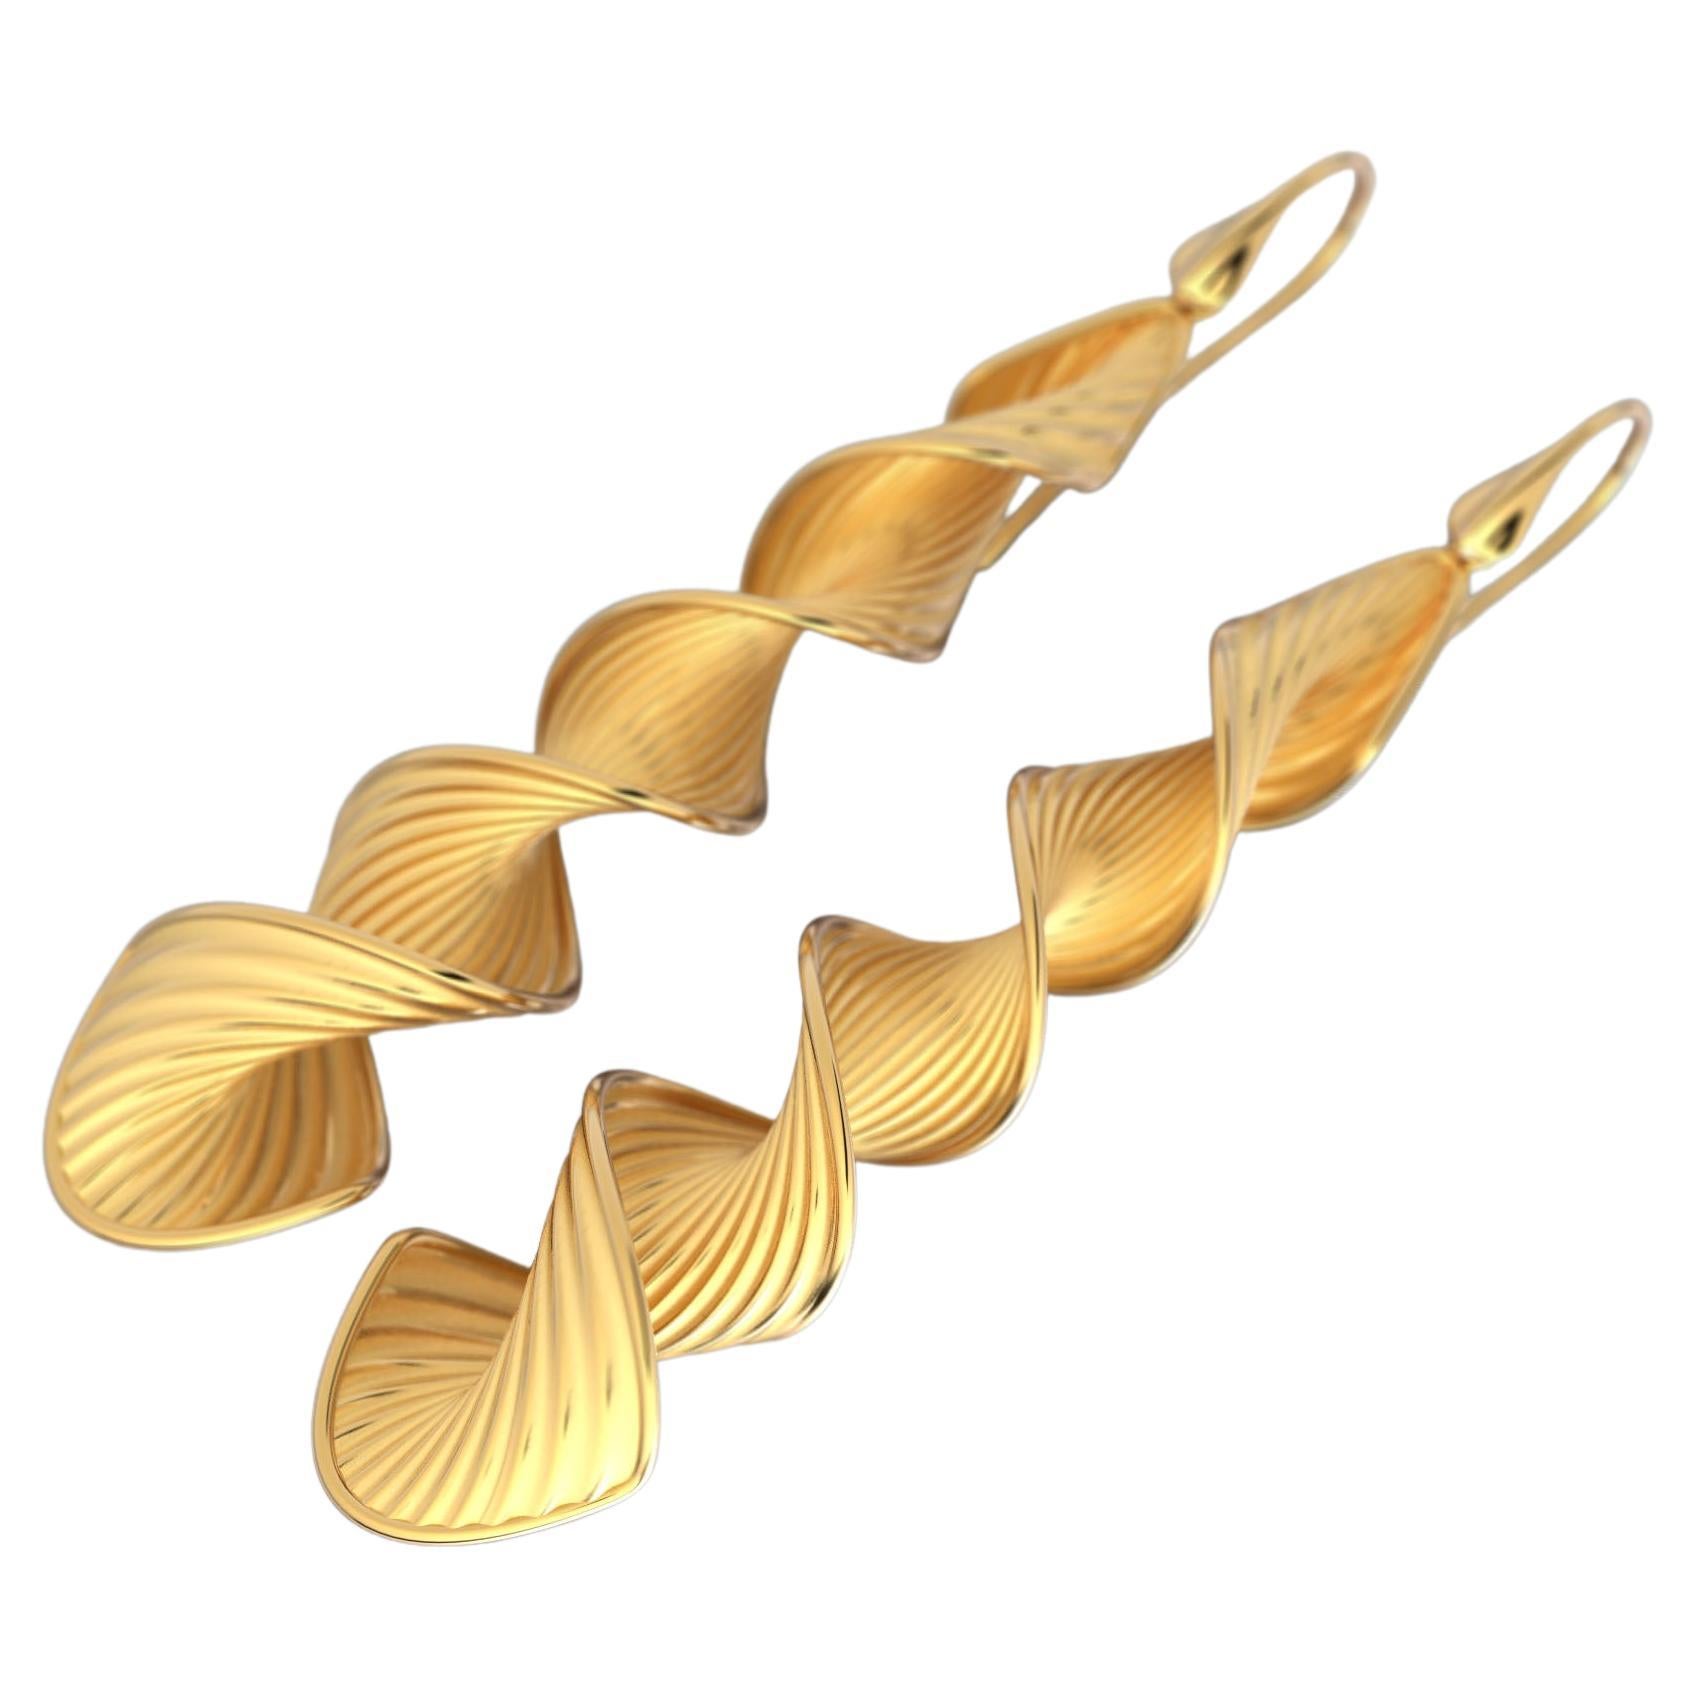 Oltremare Gioielli 14k Gold Earrings, Long Dangle Drop Earrings Made in Italy For Sale